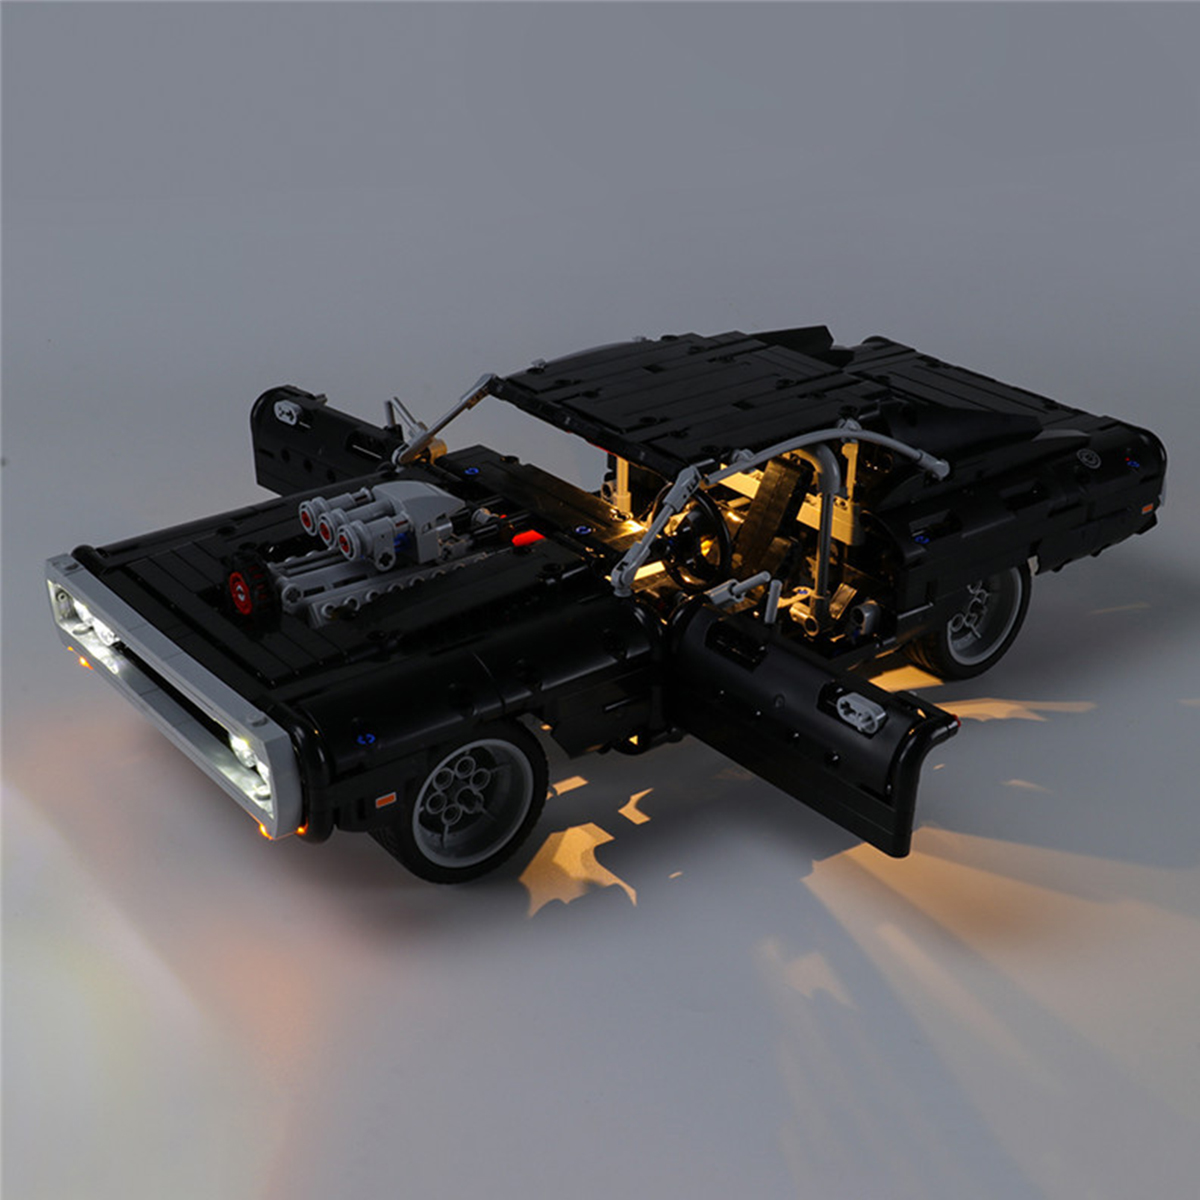 LED-Light-Lighting-Kit-Only-for-LEGO-42111-for-Doms-Dodge-Charger-Car-Bricks-Toy-1721042-3